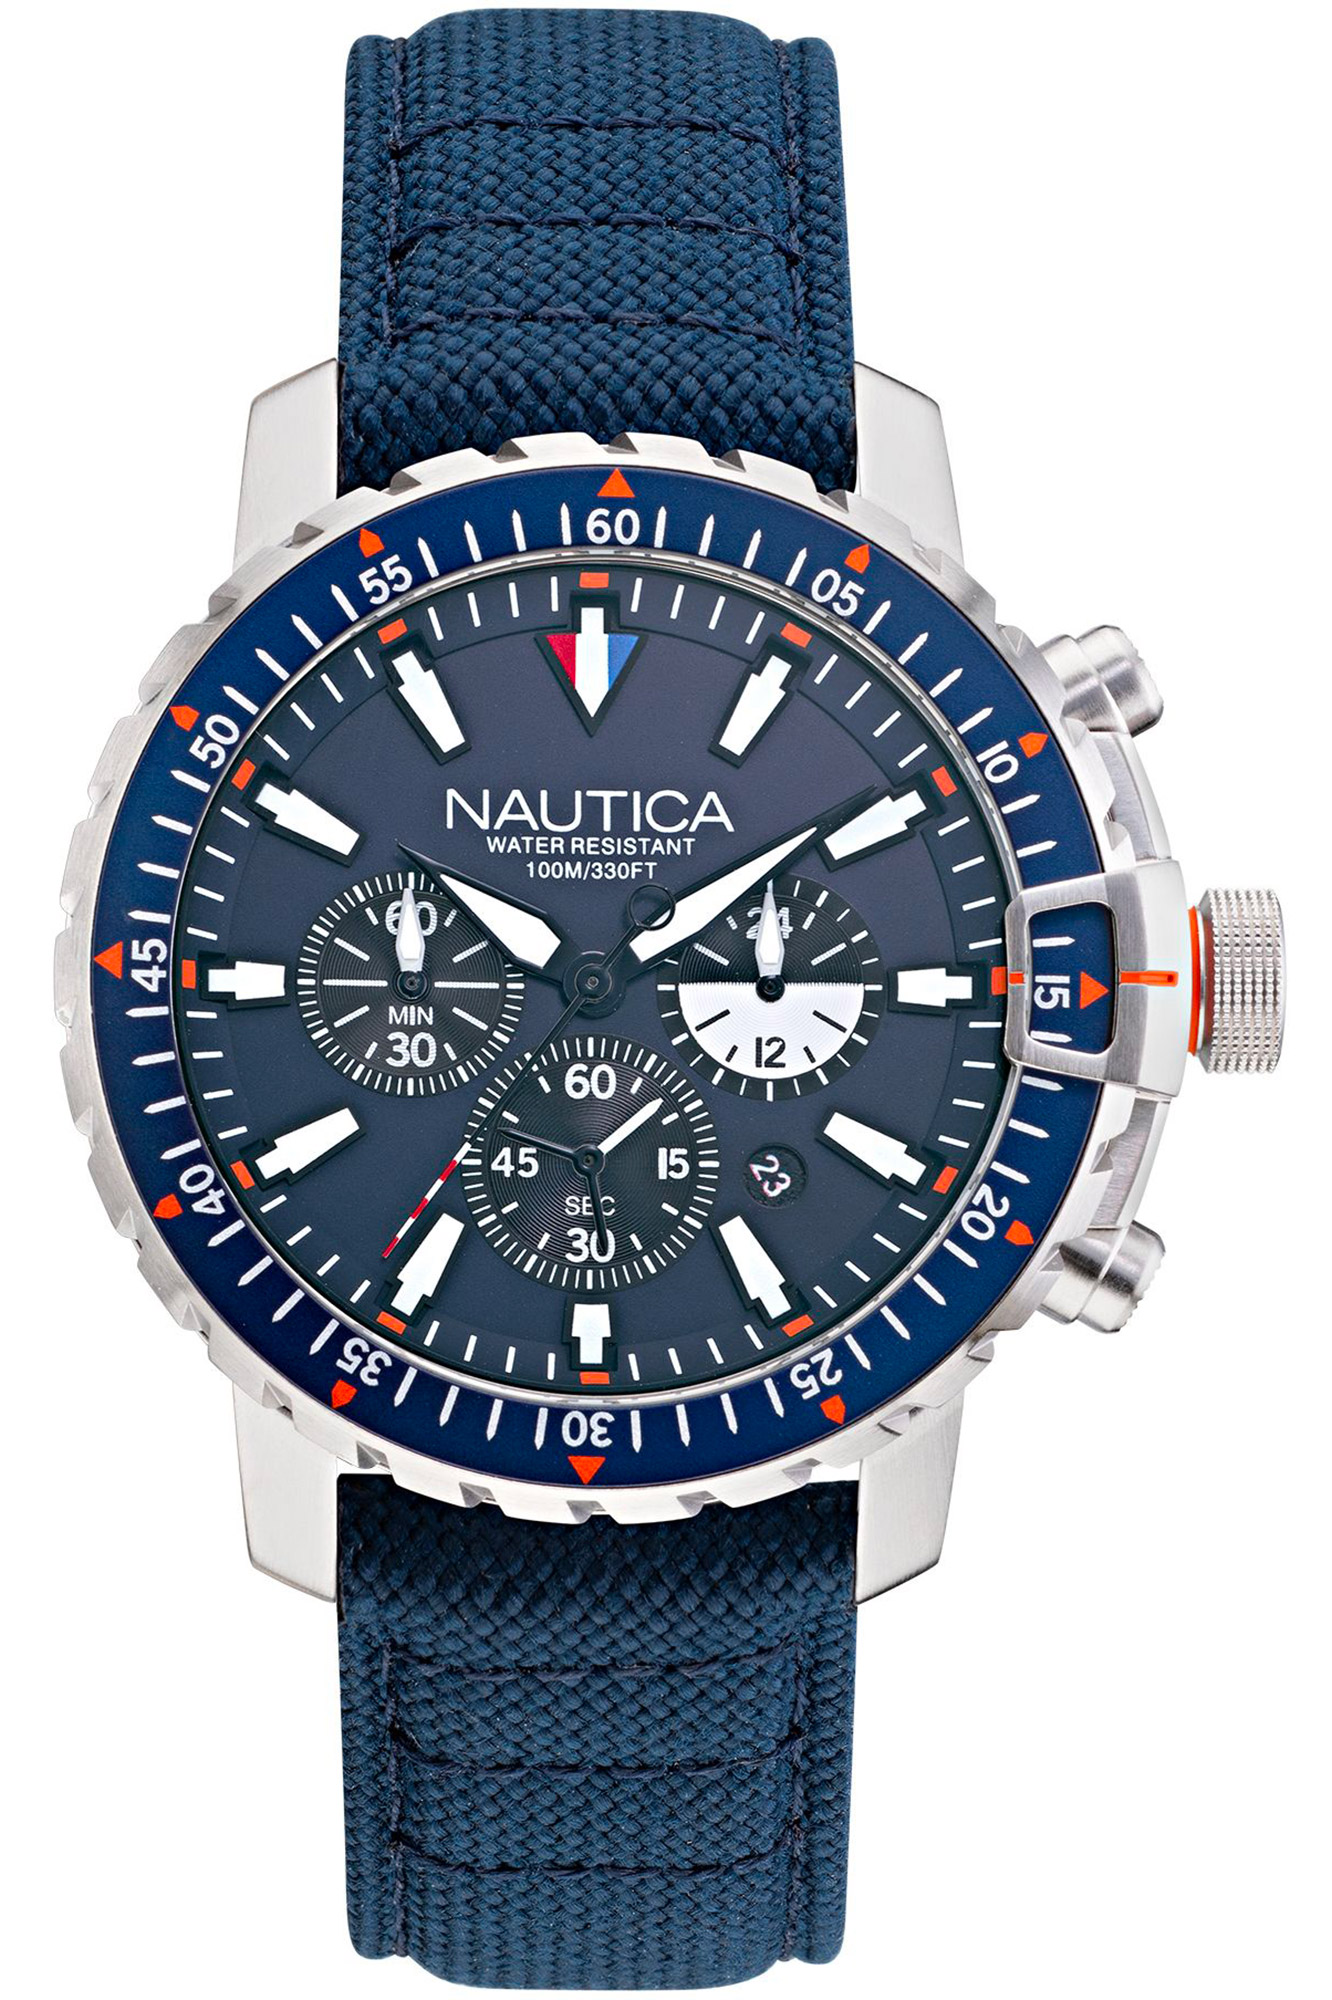 Reloj Nautica napics006